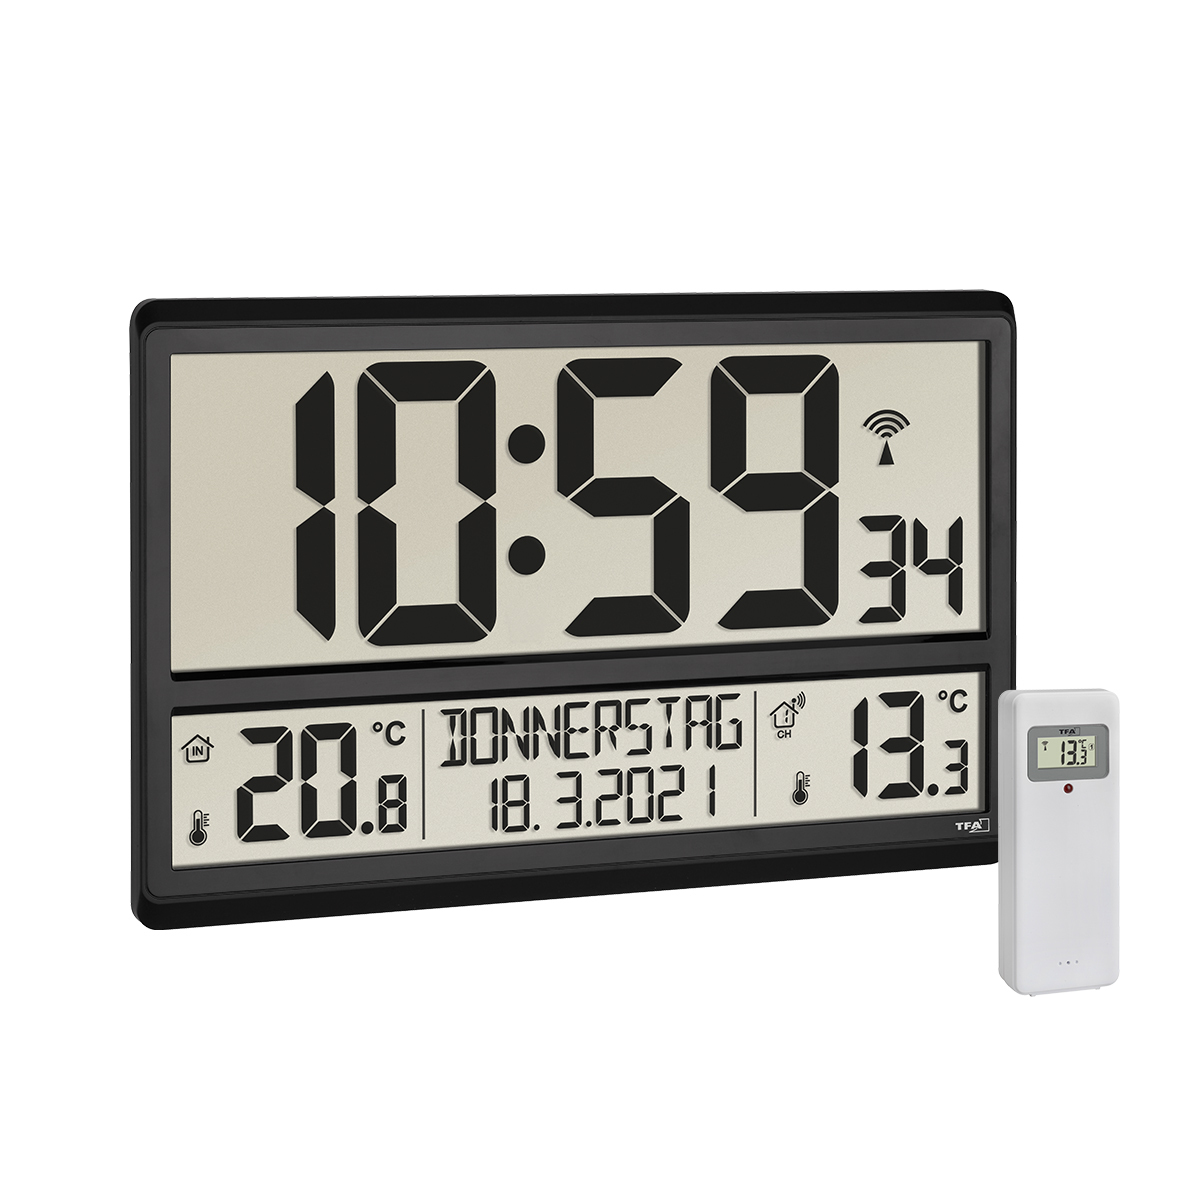 Digital Xl Radio Controlled Clock With, Outdoor Digital Clock Temperature Display